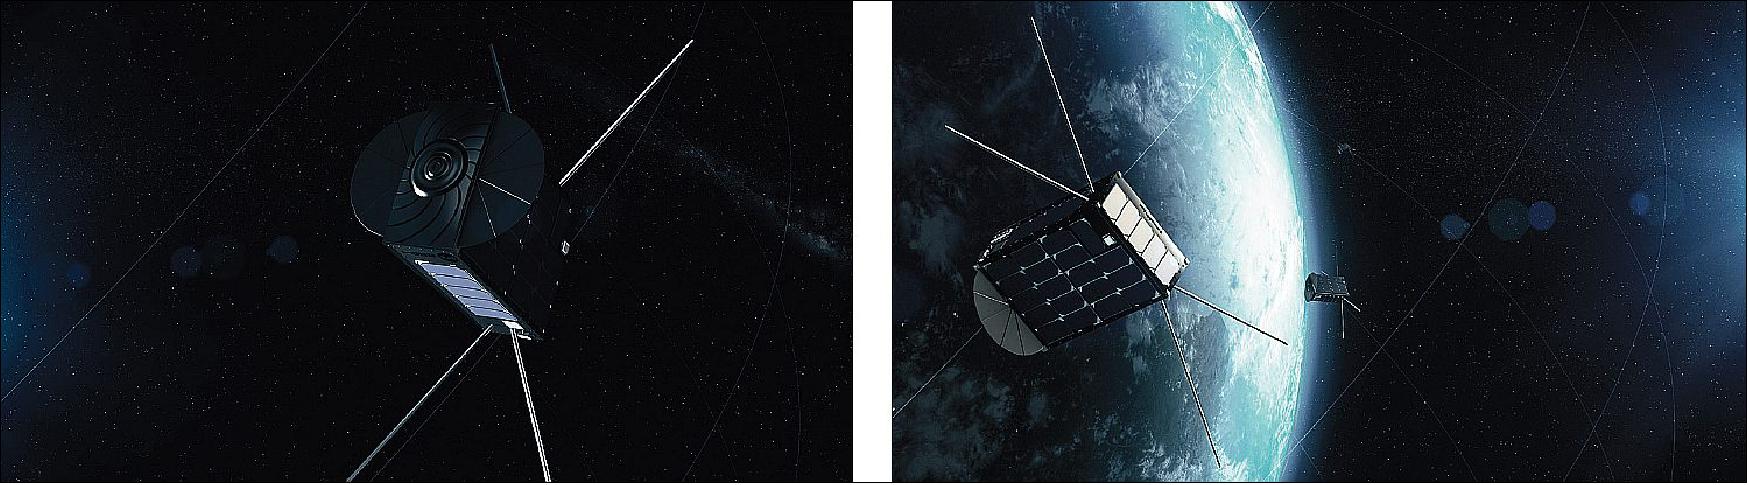 Figure 38: Artist's illustration of the deployed BRO satellites (image credit: Rocket Lab) 60)